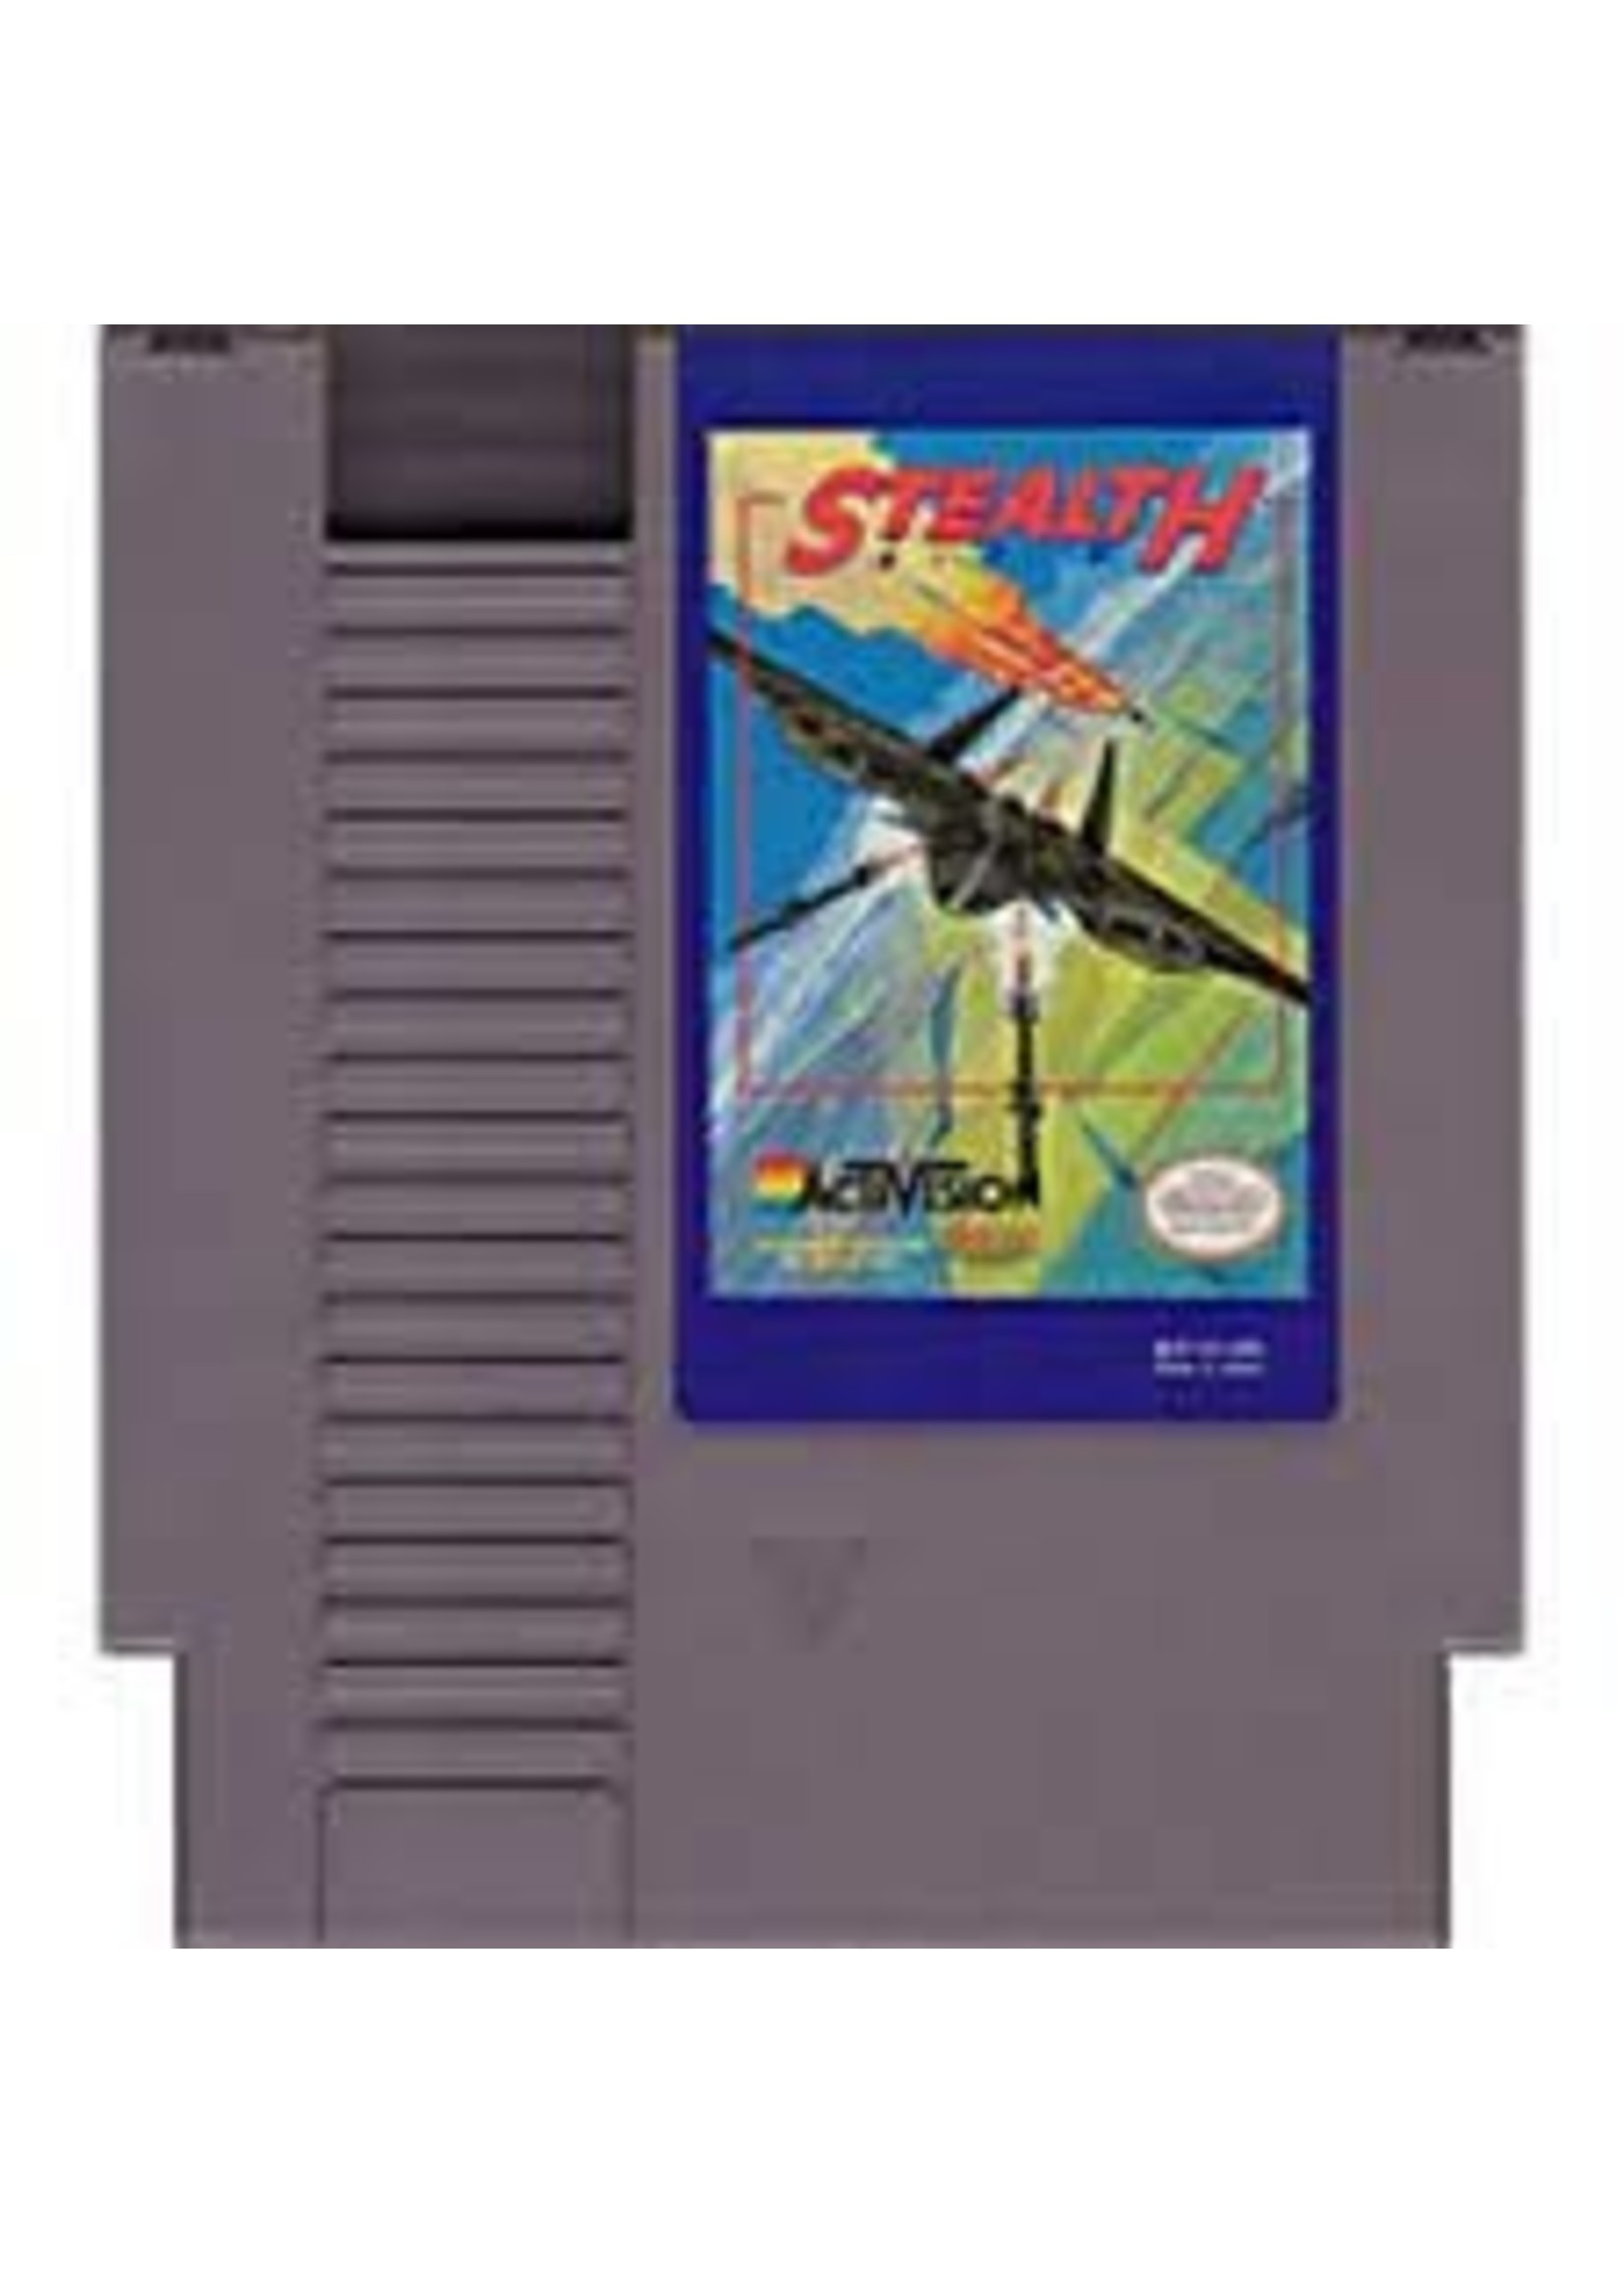 Nintendo (NES) Stealth